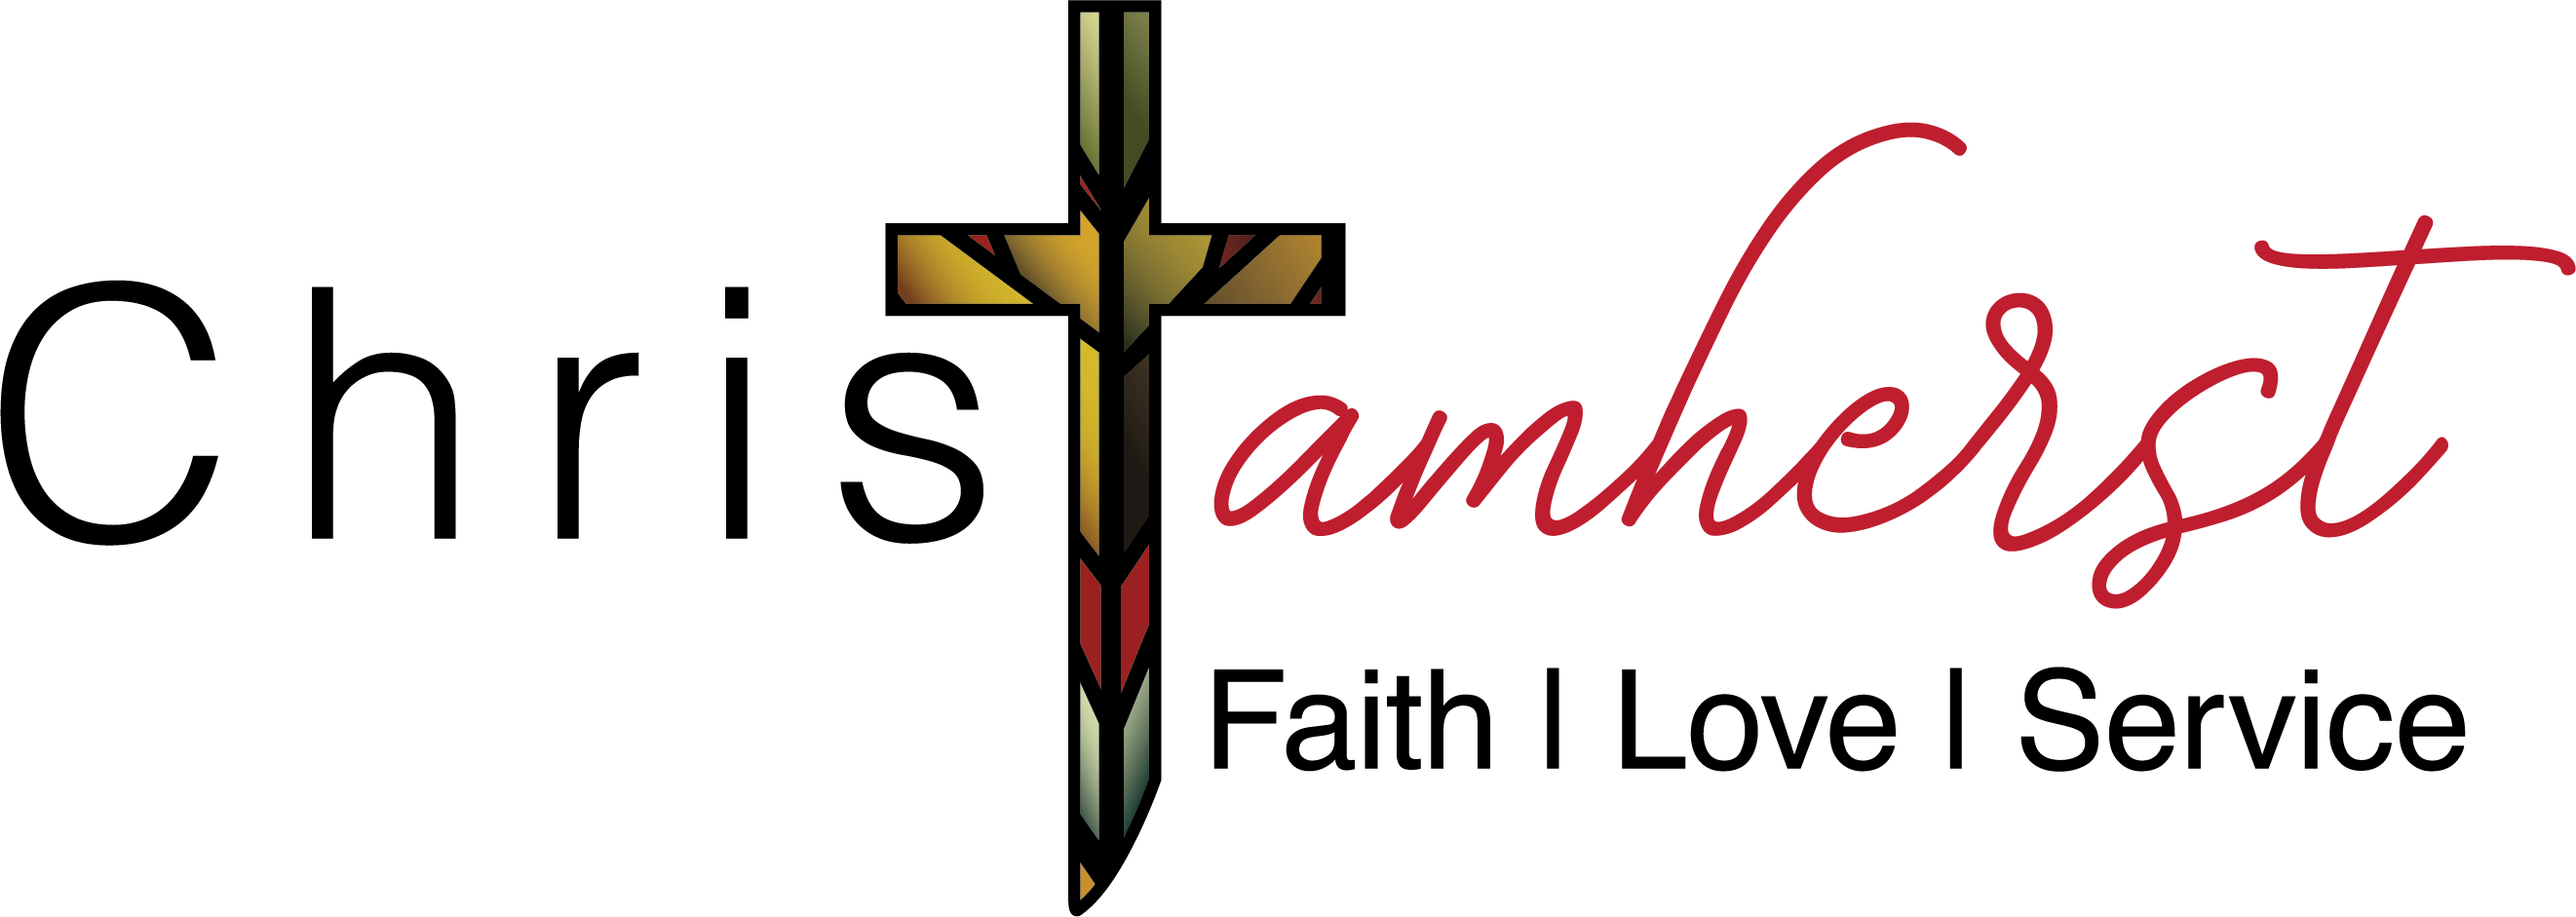 christ-amherst-logo-2